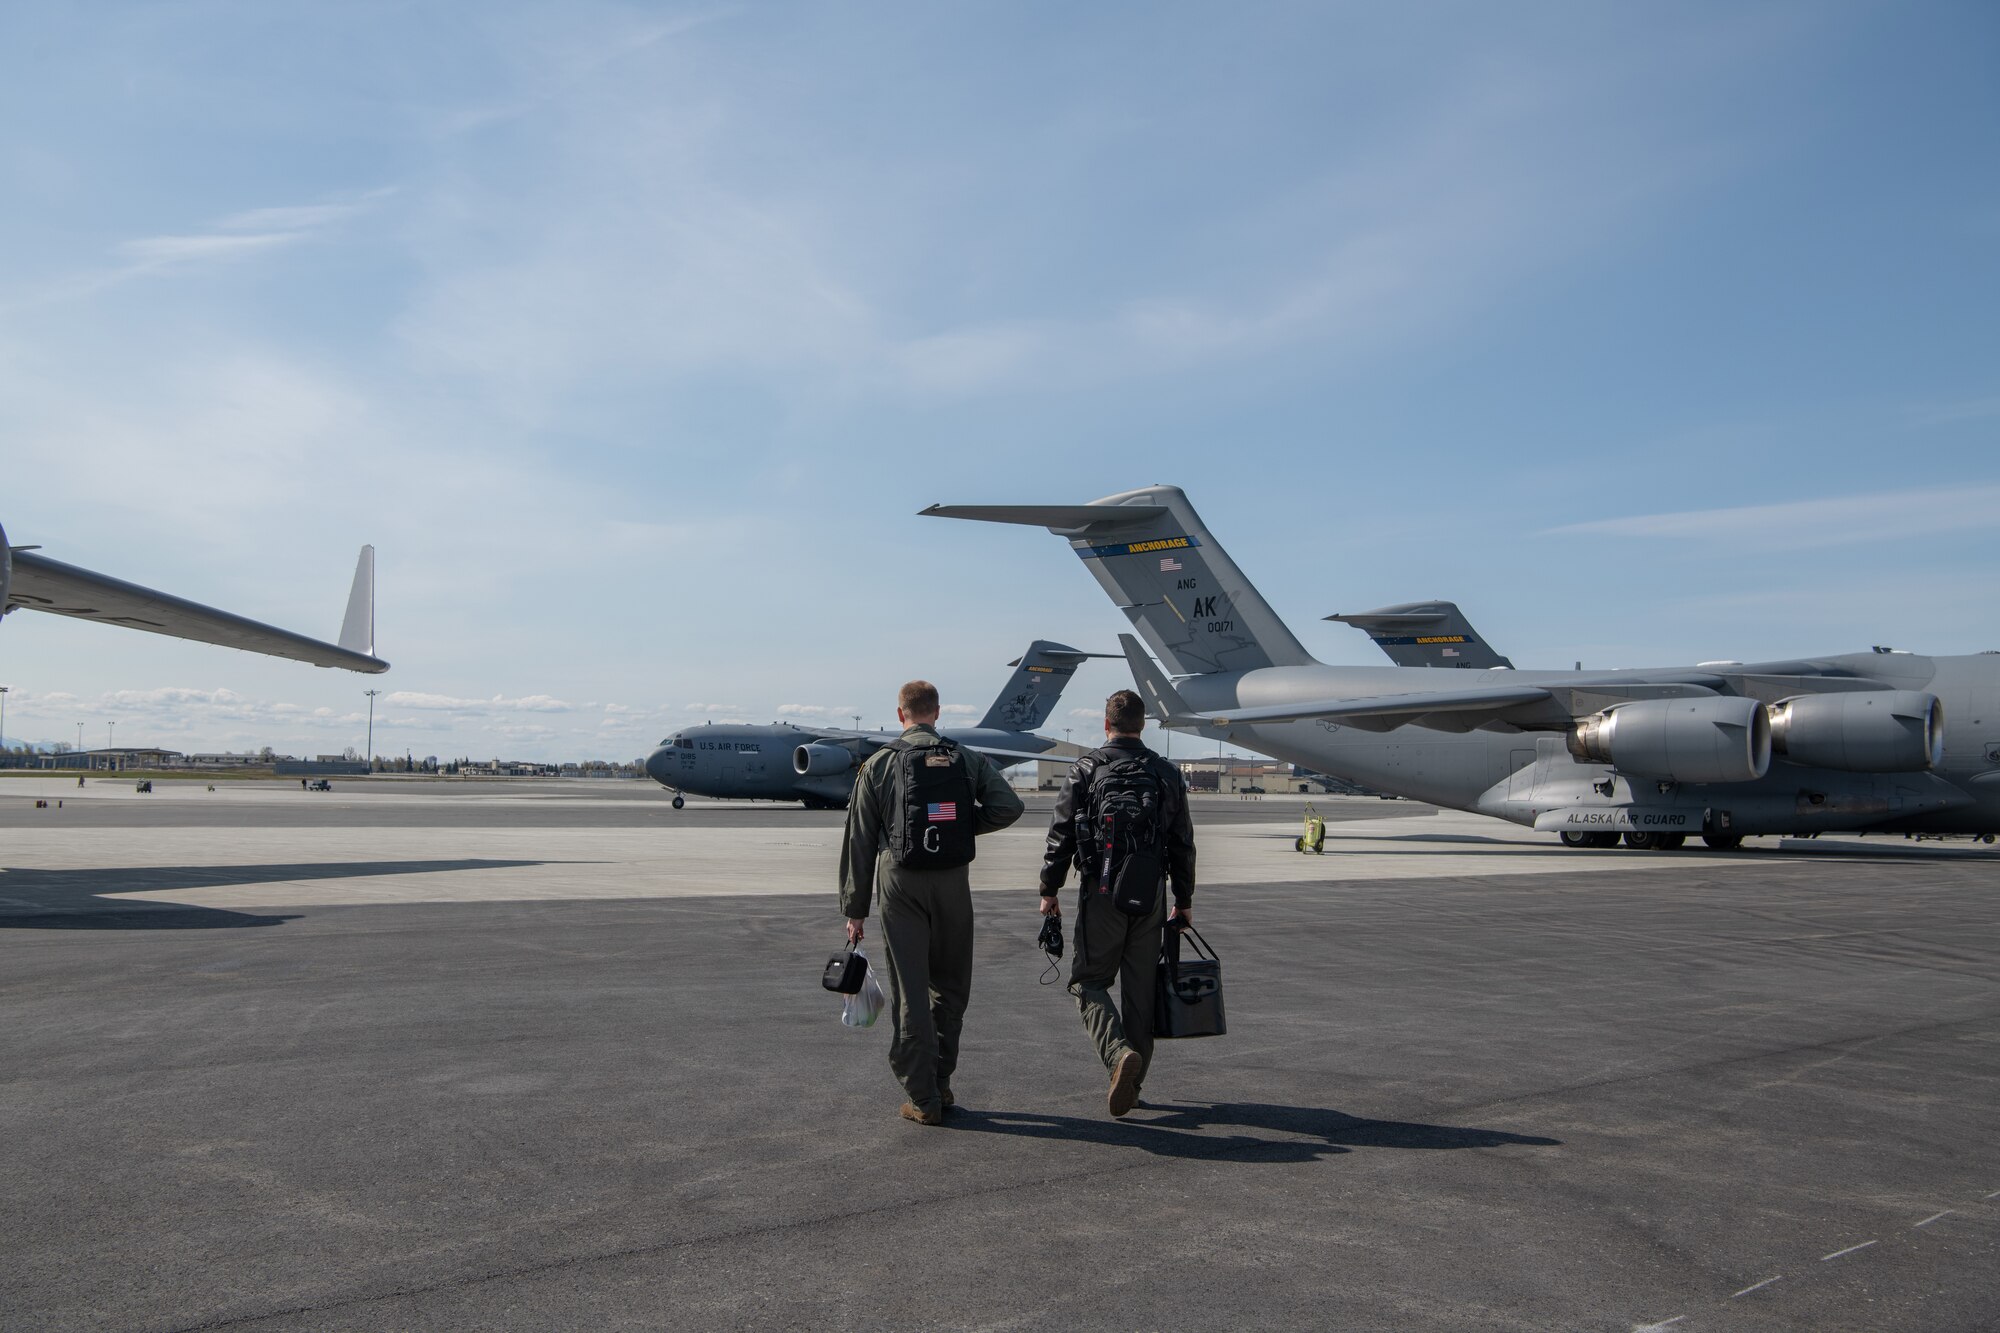 A photo of men walking toward a jet